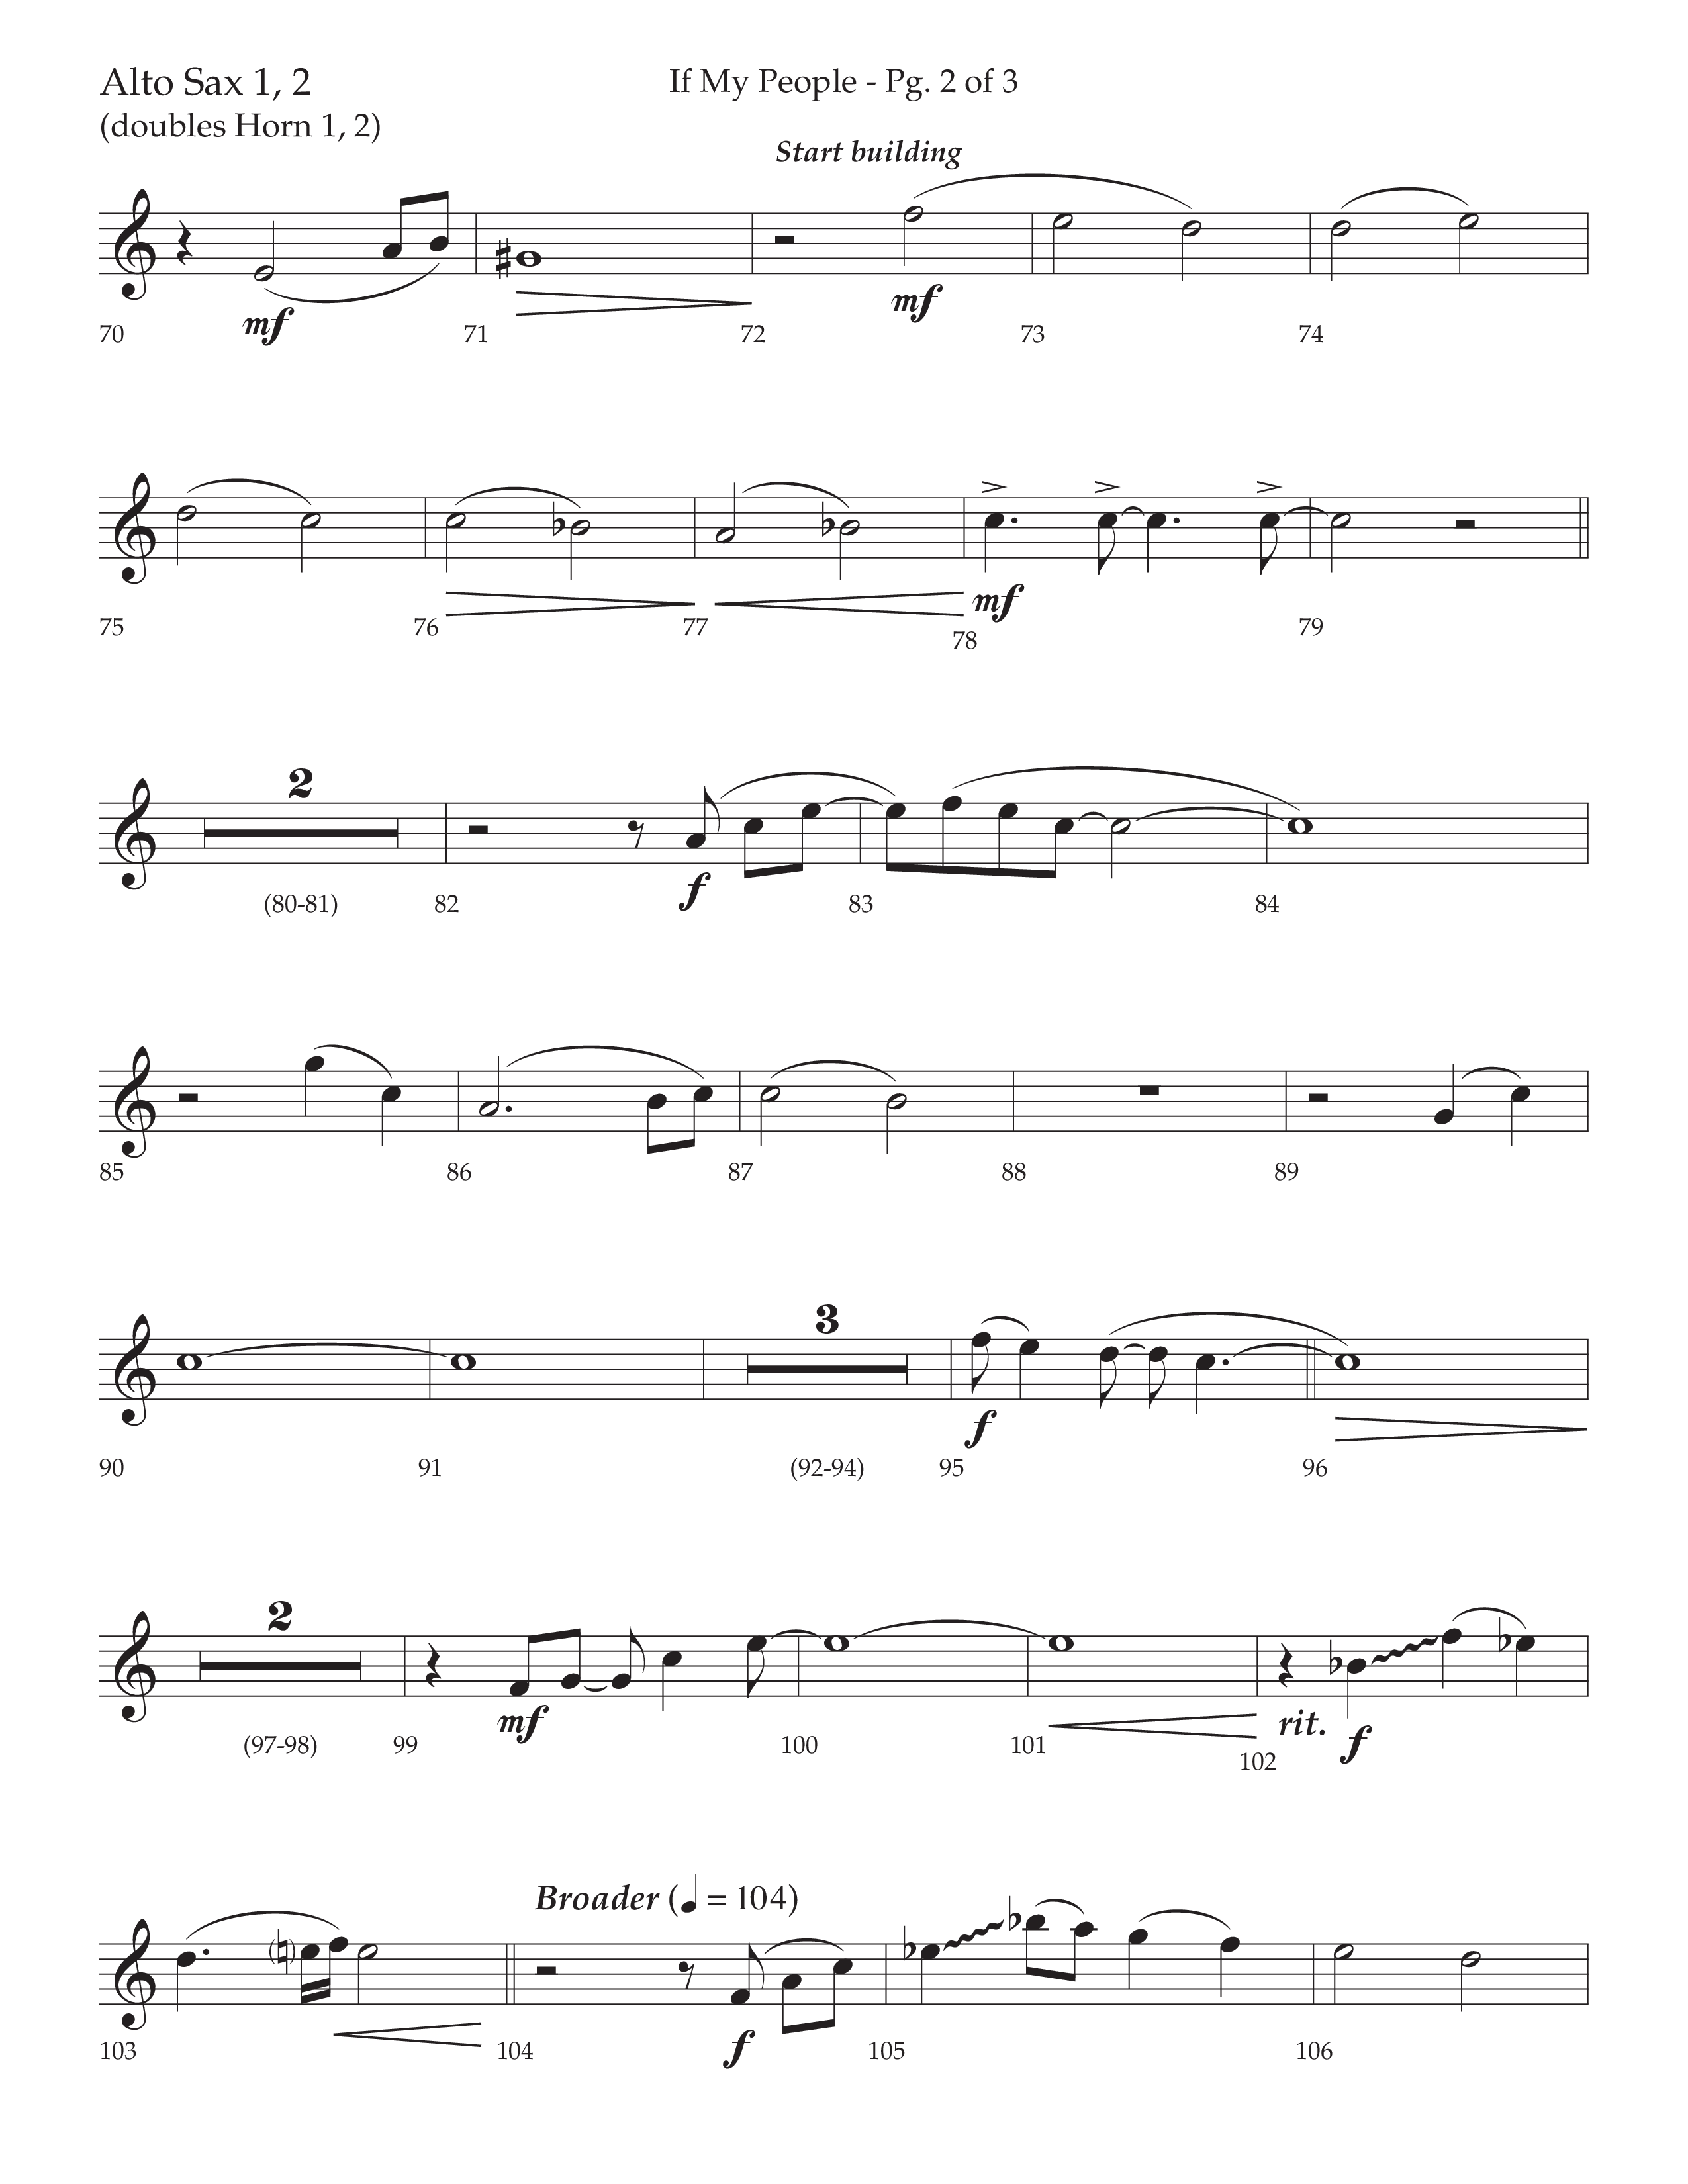 If My People (Choral Anthem SATB) Alto Sax 1/2 (Lifeway Choral / Arr. David Wise / Orch. David Shipps)